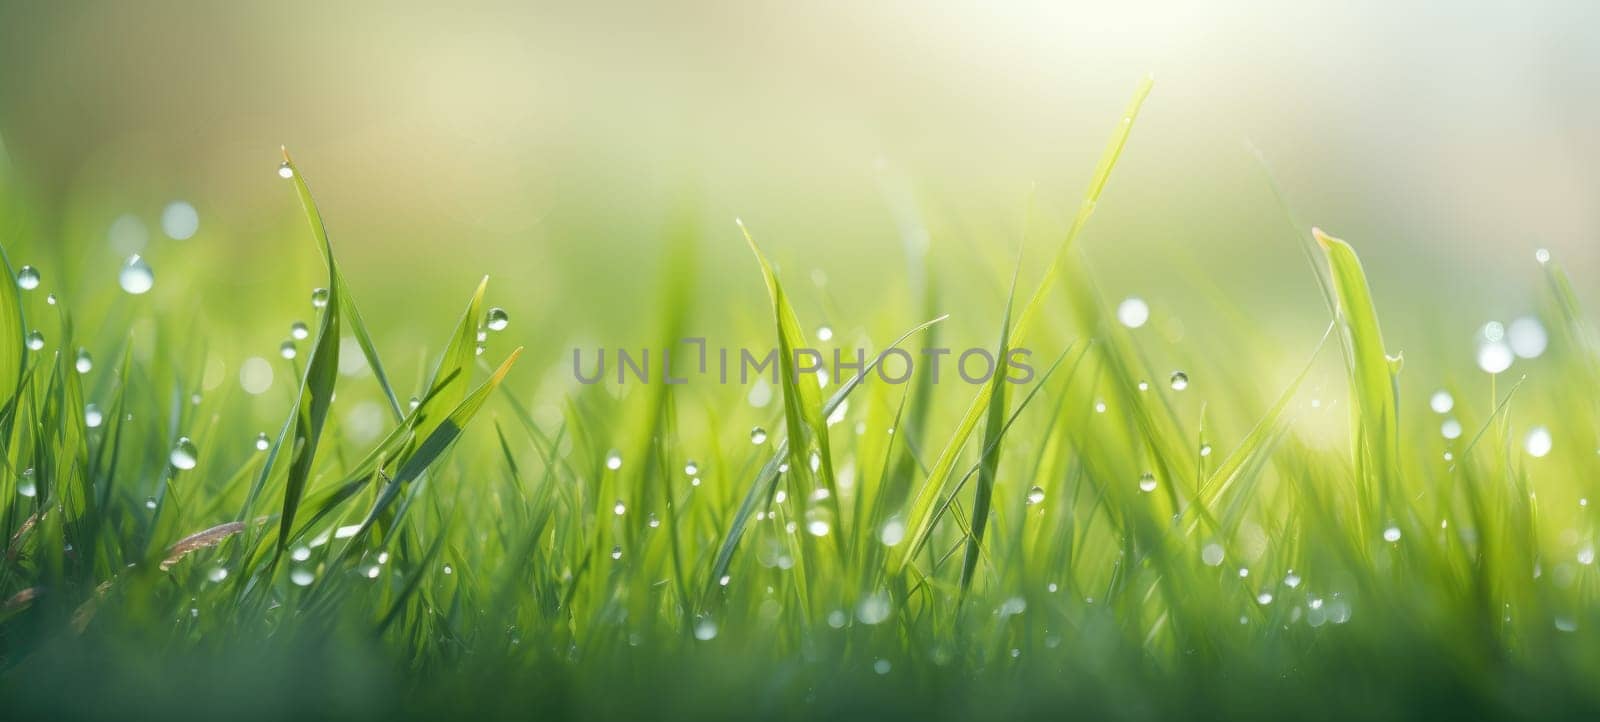 grass sunlight spring summer with dew, ai by rachellaiyl